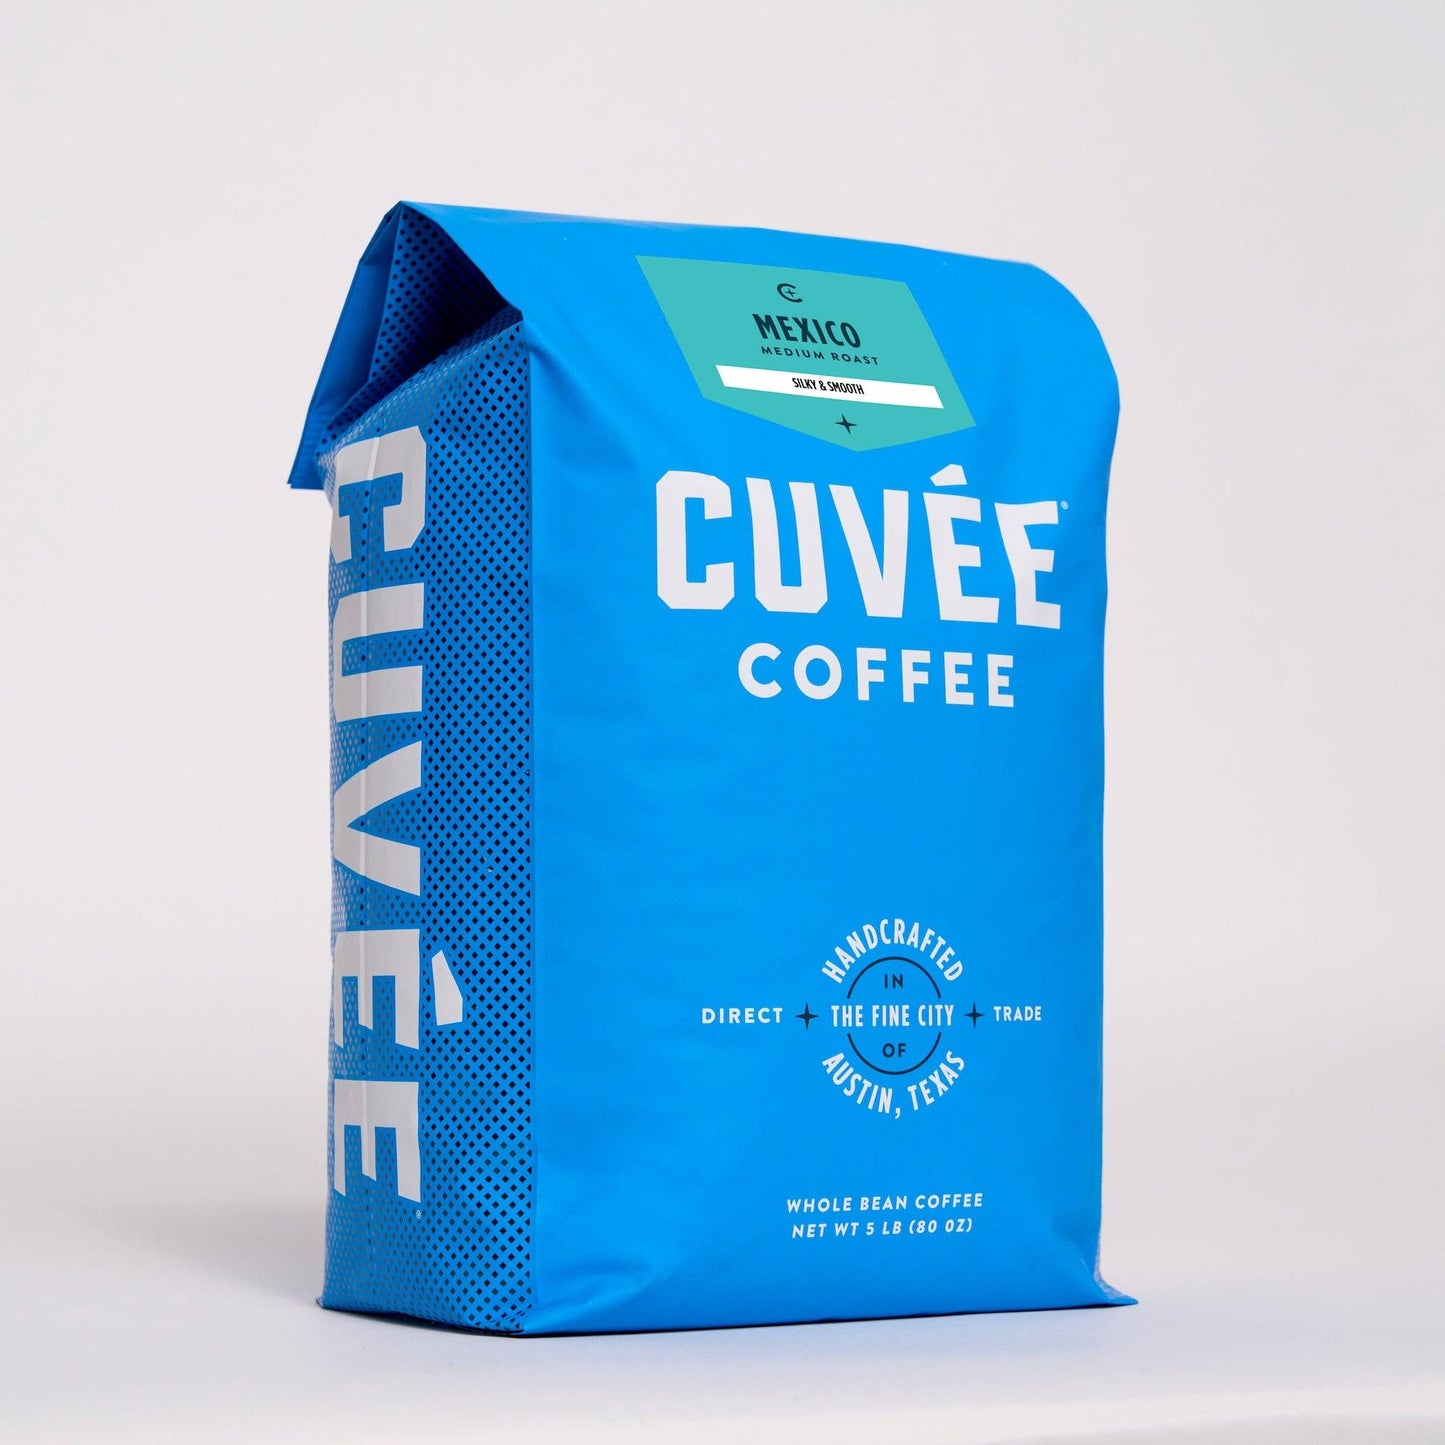 Cuvée Coffee - Mexico - Case of 6 x 12oz